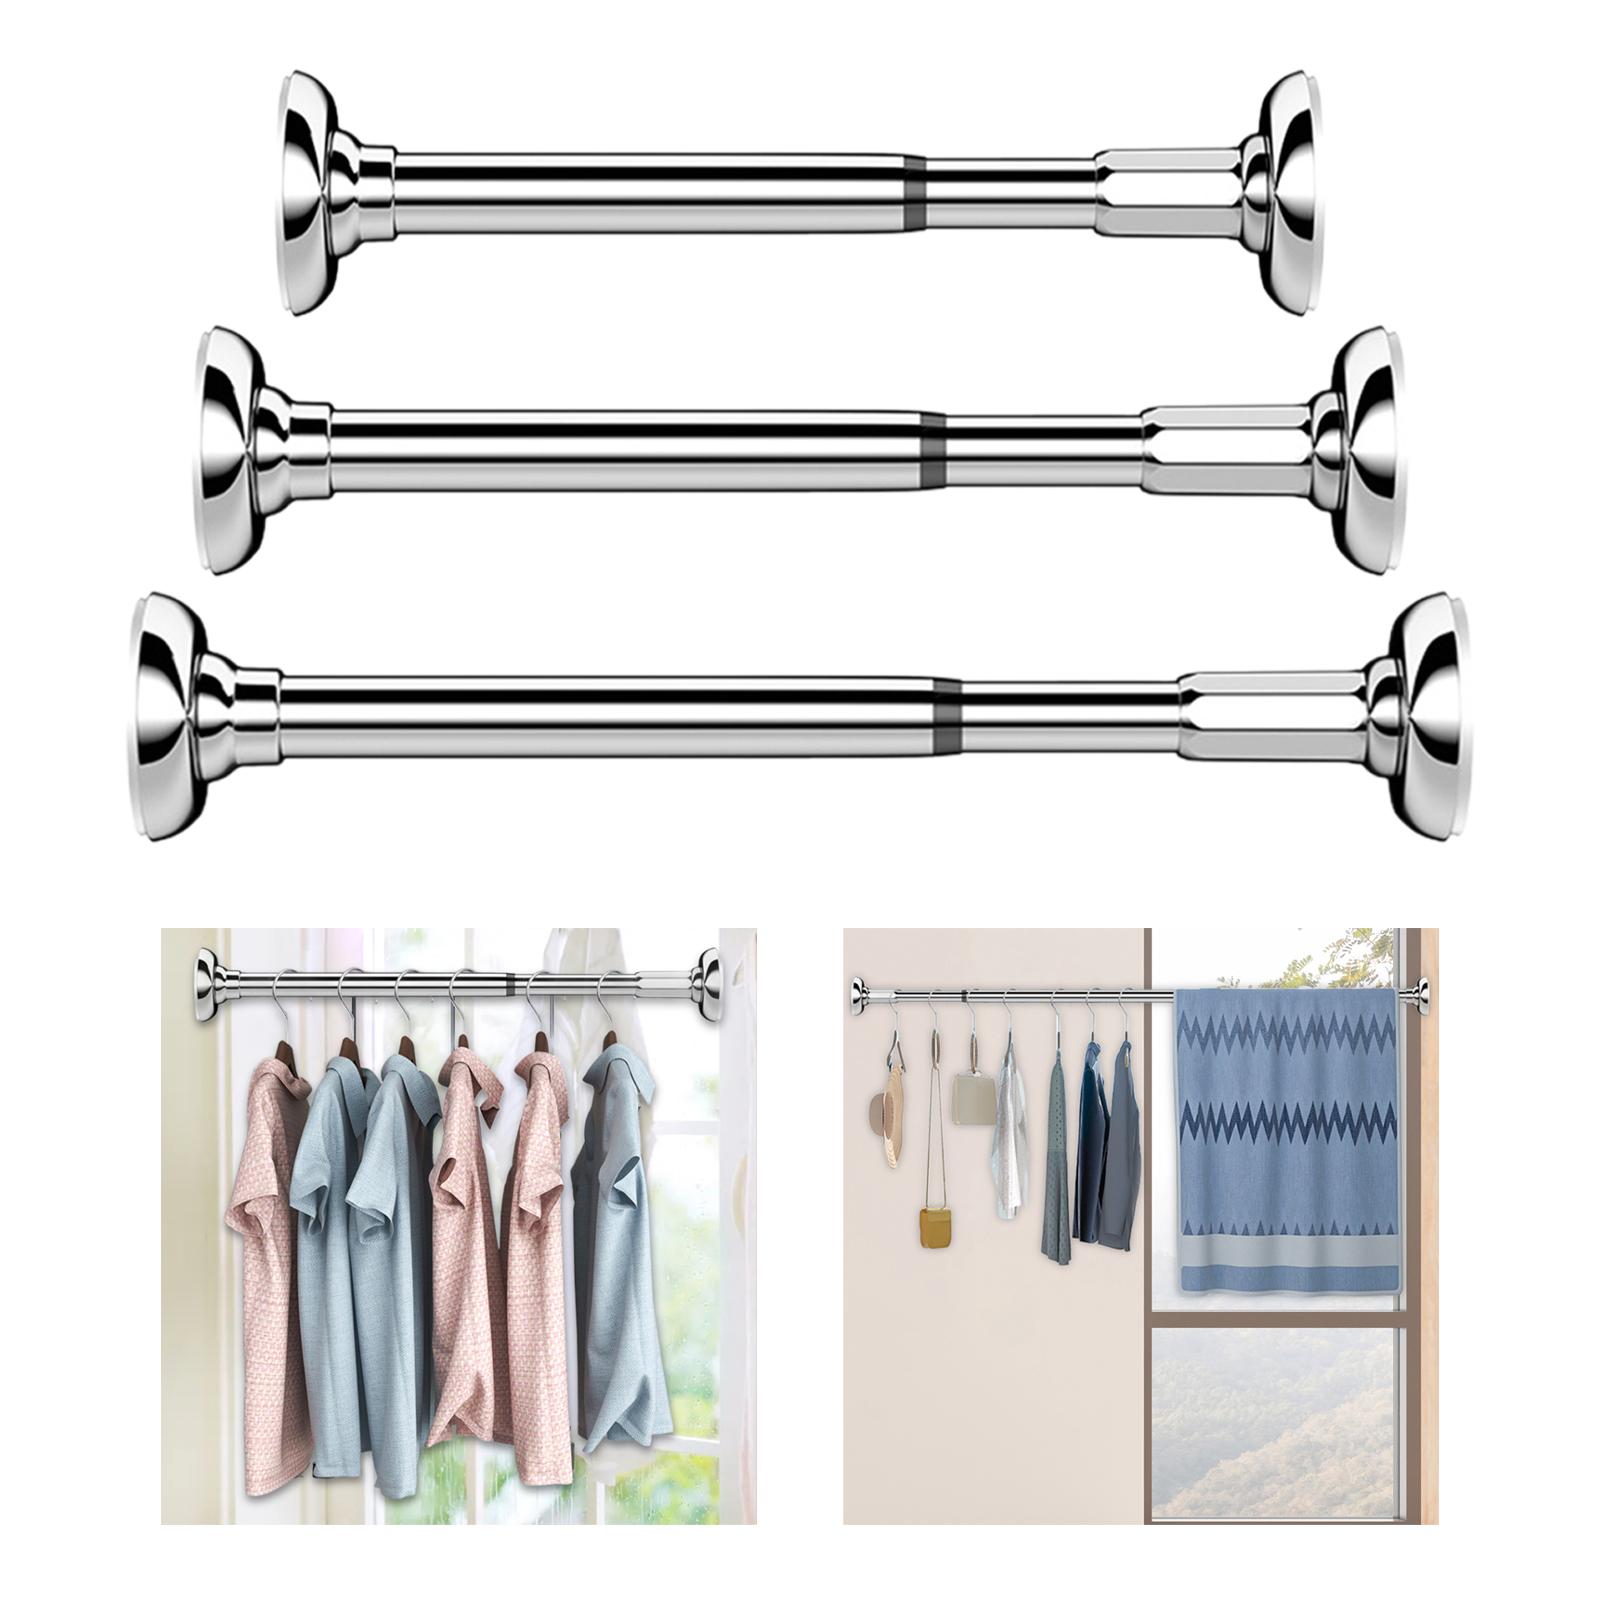 Telescopic Clothing Rod Closet Hanging Pole for Laundry Room Wardrobe Closet 0.35m to 0.5m